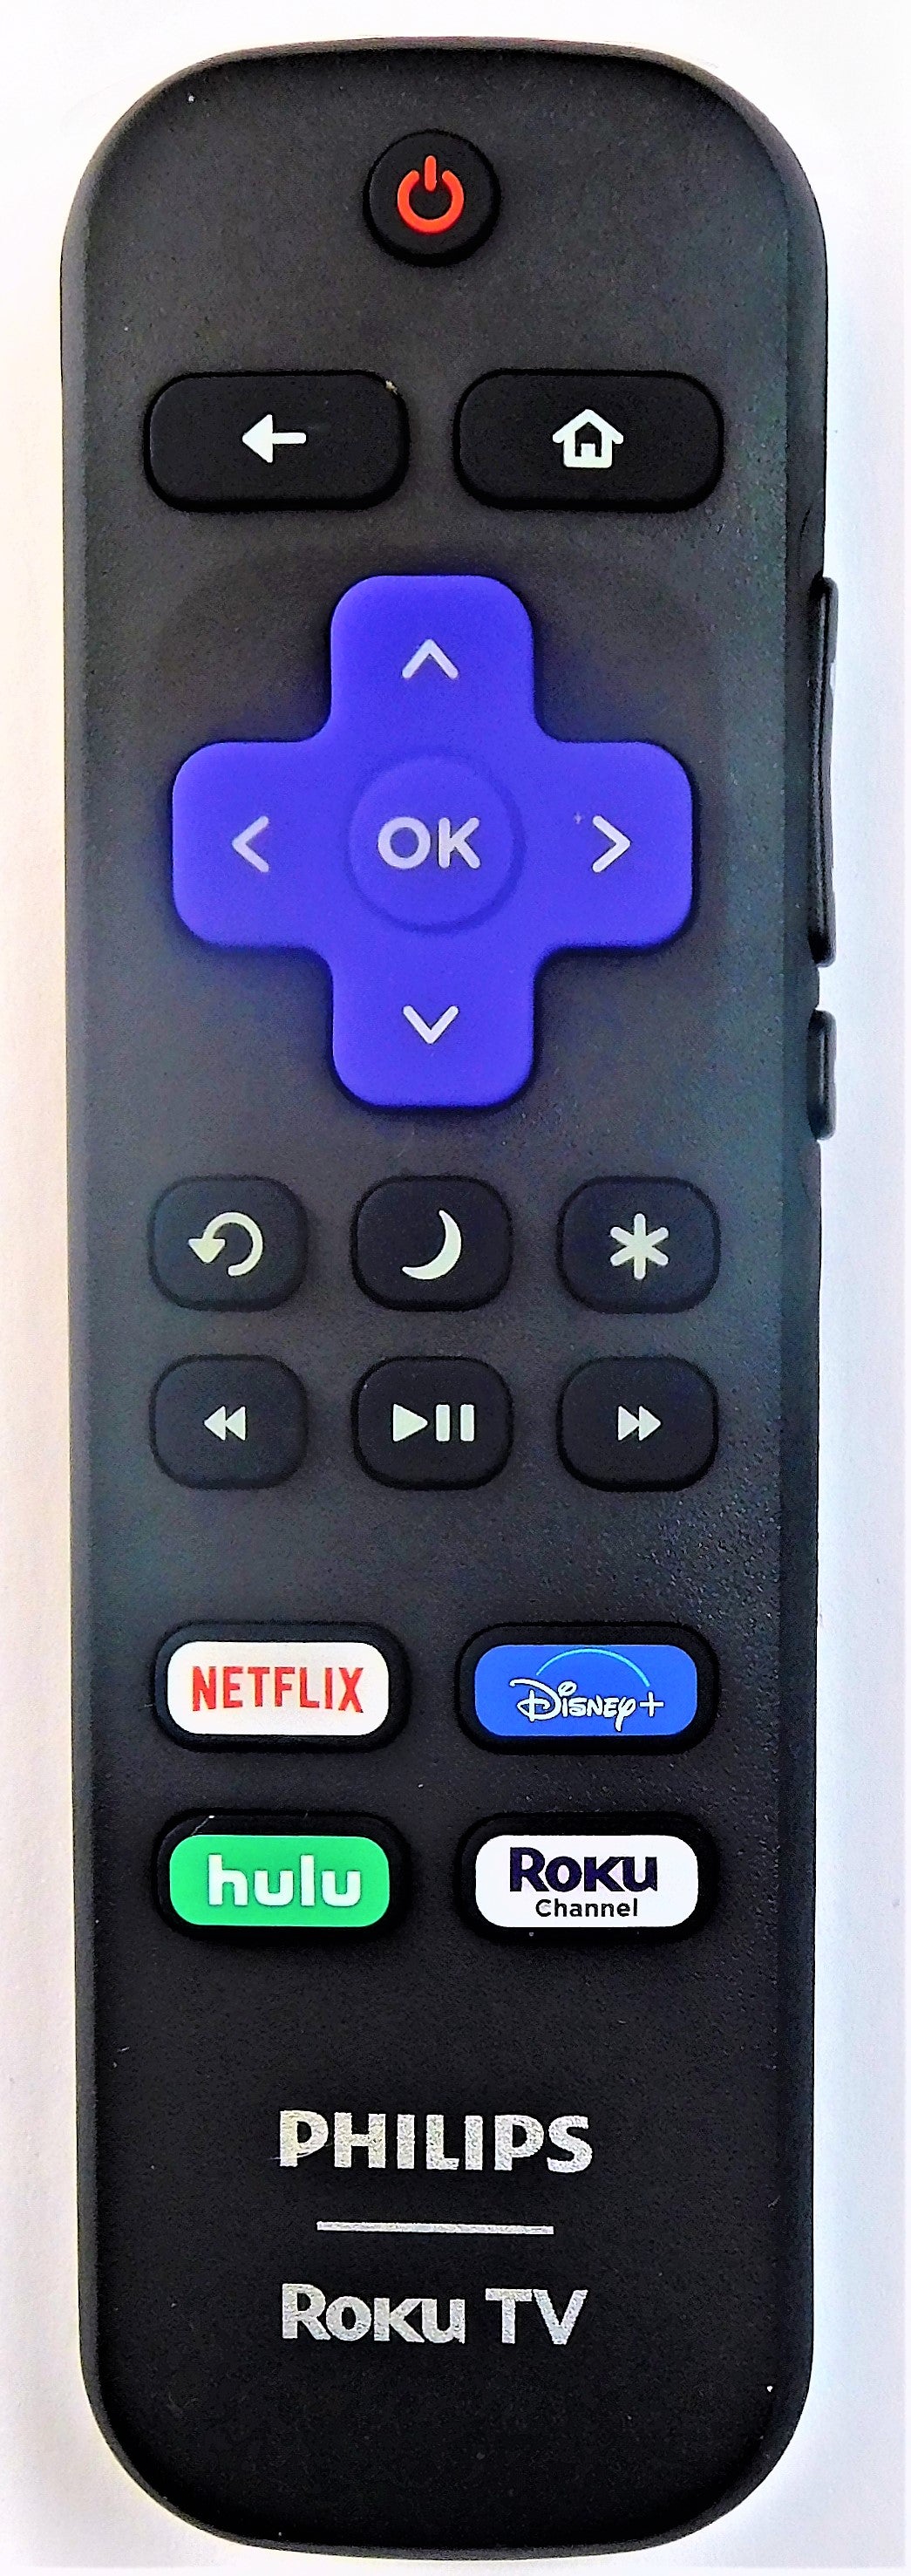 Original OEM replacement remote control for Philips Roku TV URMT21CND015